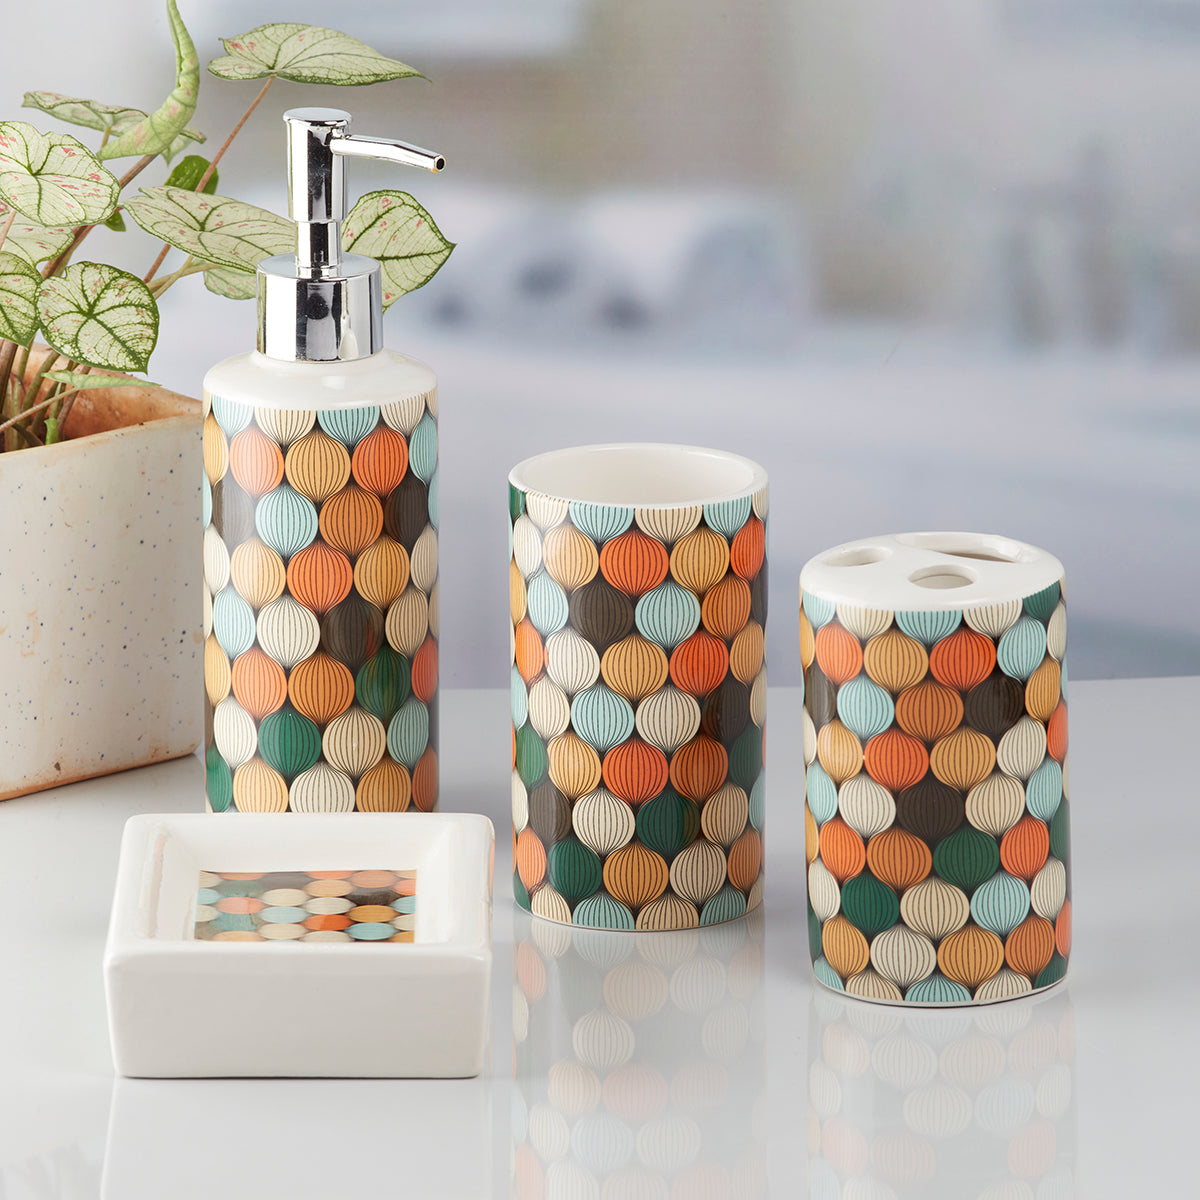 Ceramic Bathroom Accessories Set of 4 Bath Set with Soap Dispenser (9761)